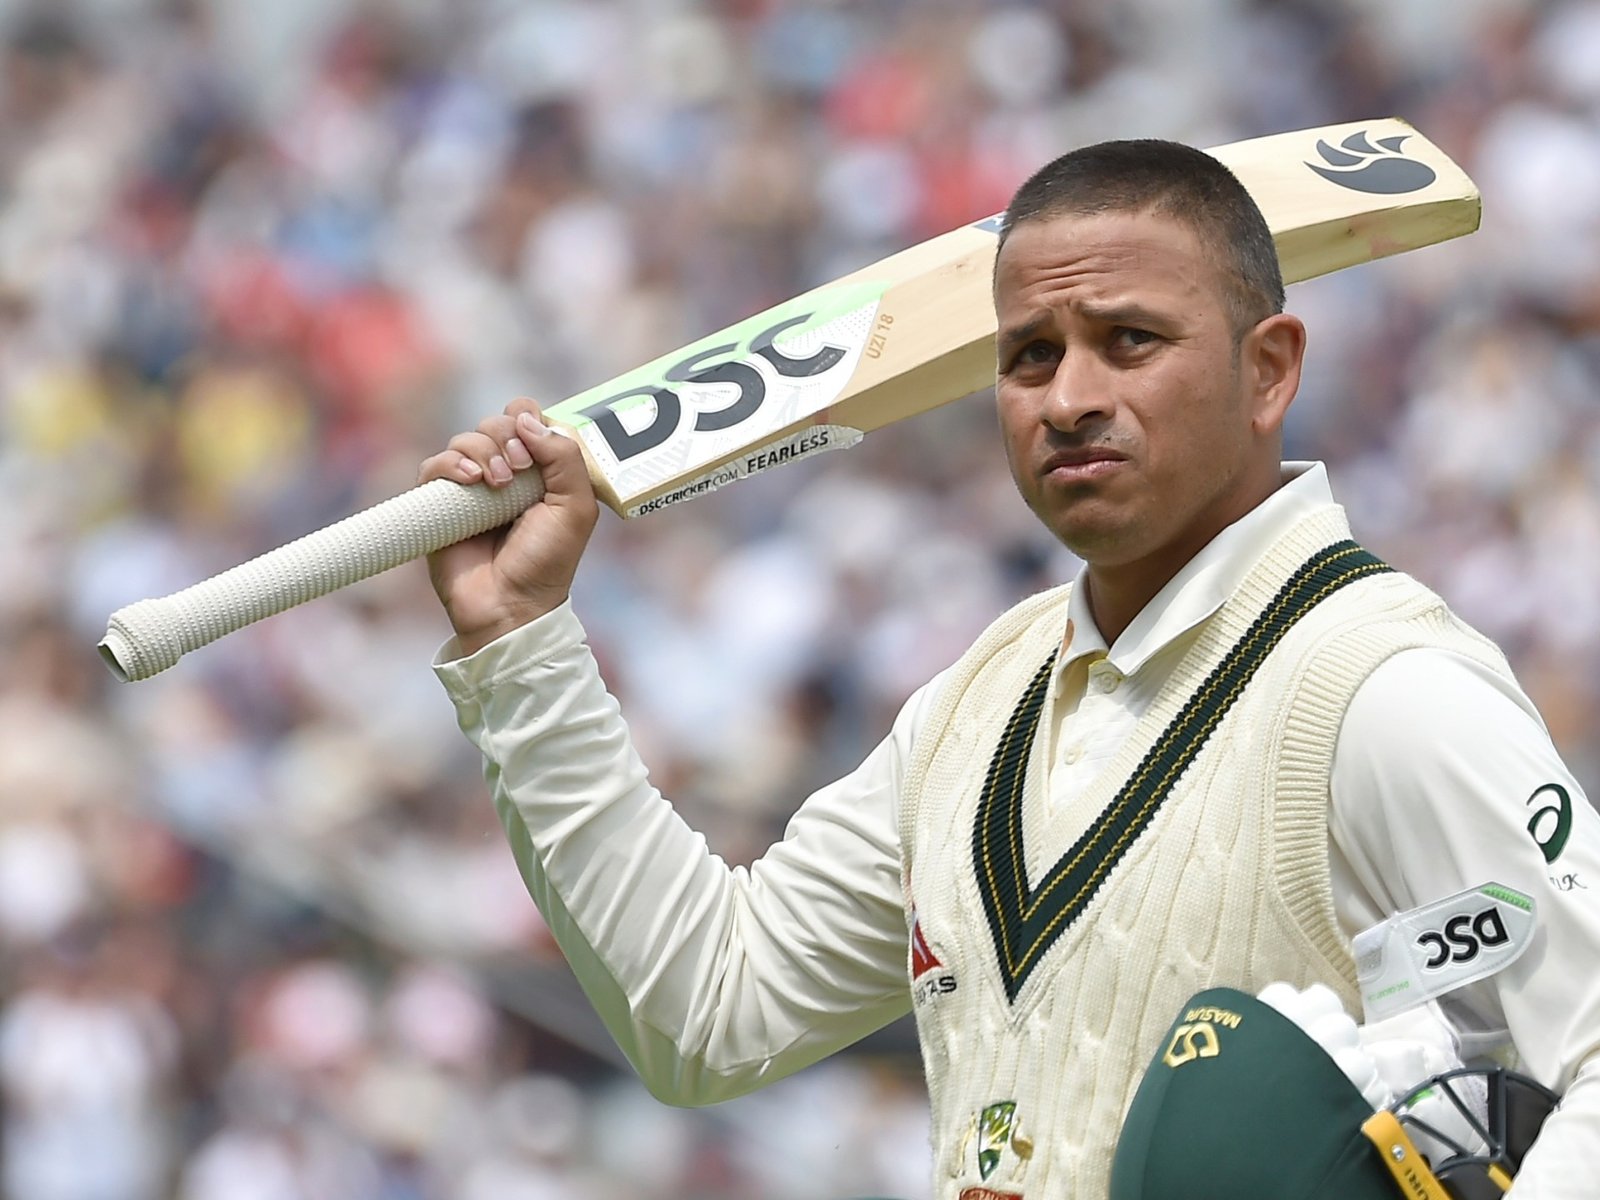 ICC slammed for blocking Australian cricketer’s show of support for Gaza | Cricket News